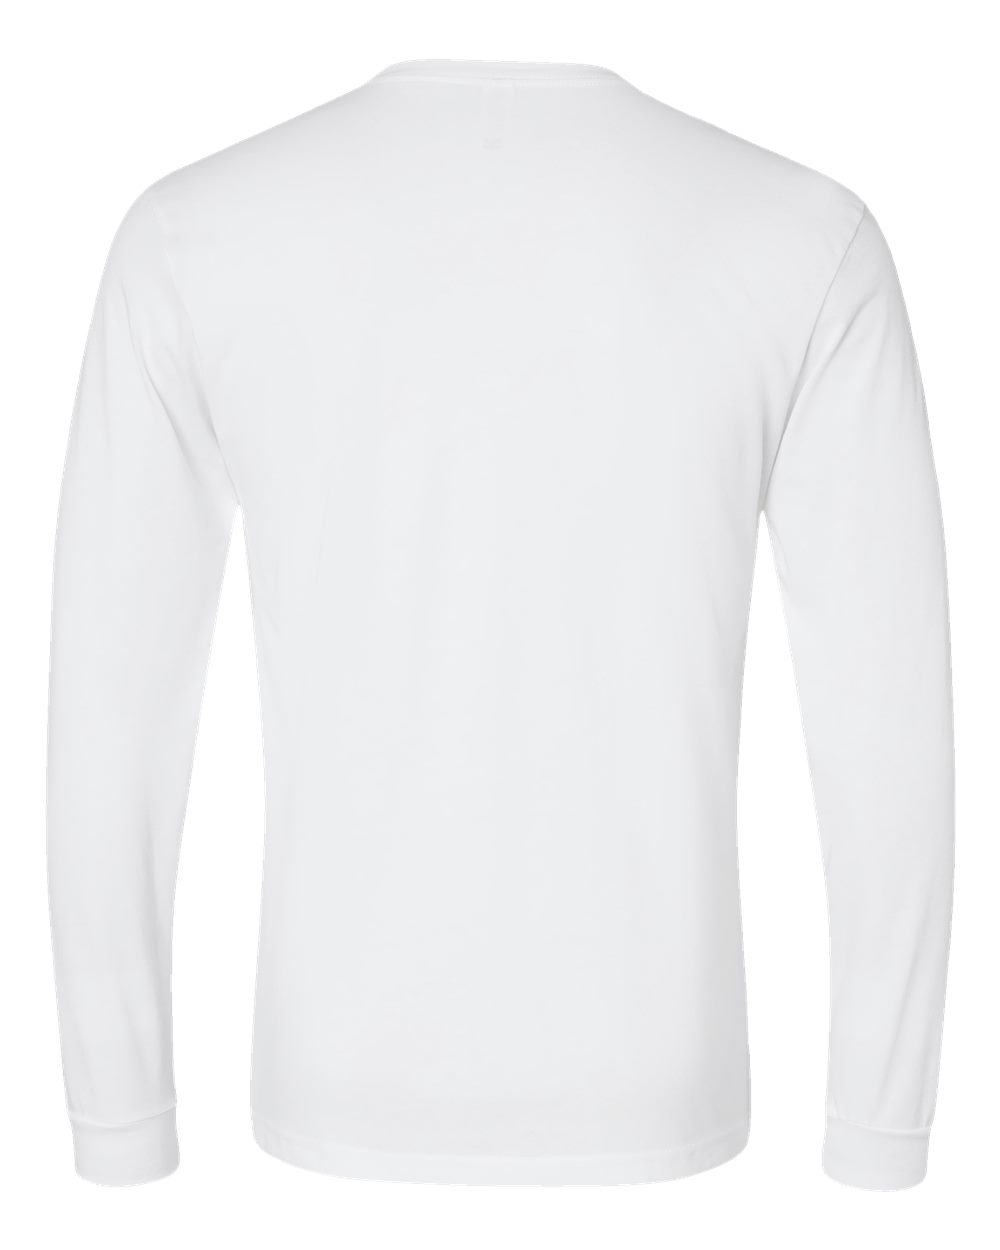 Next Level 6211 Unisex CVC Long Sleeve T-Shirt